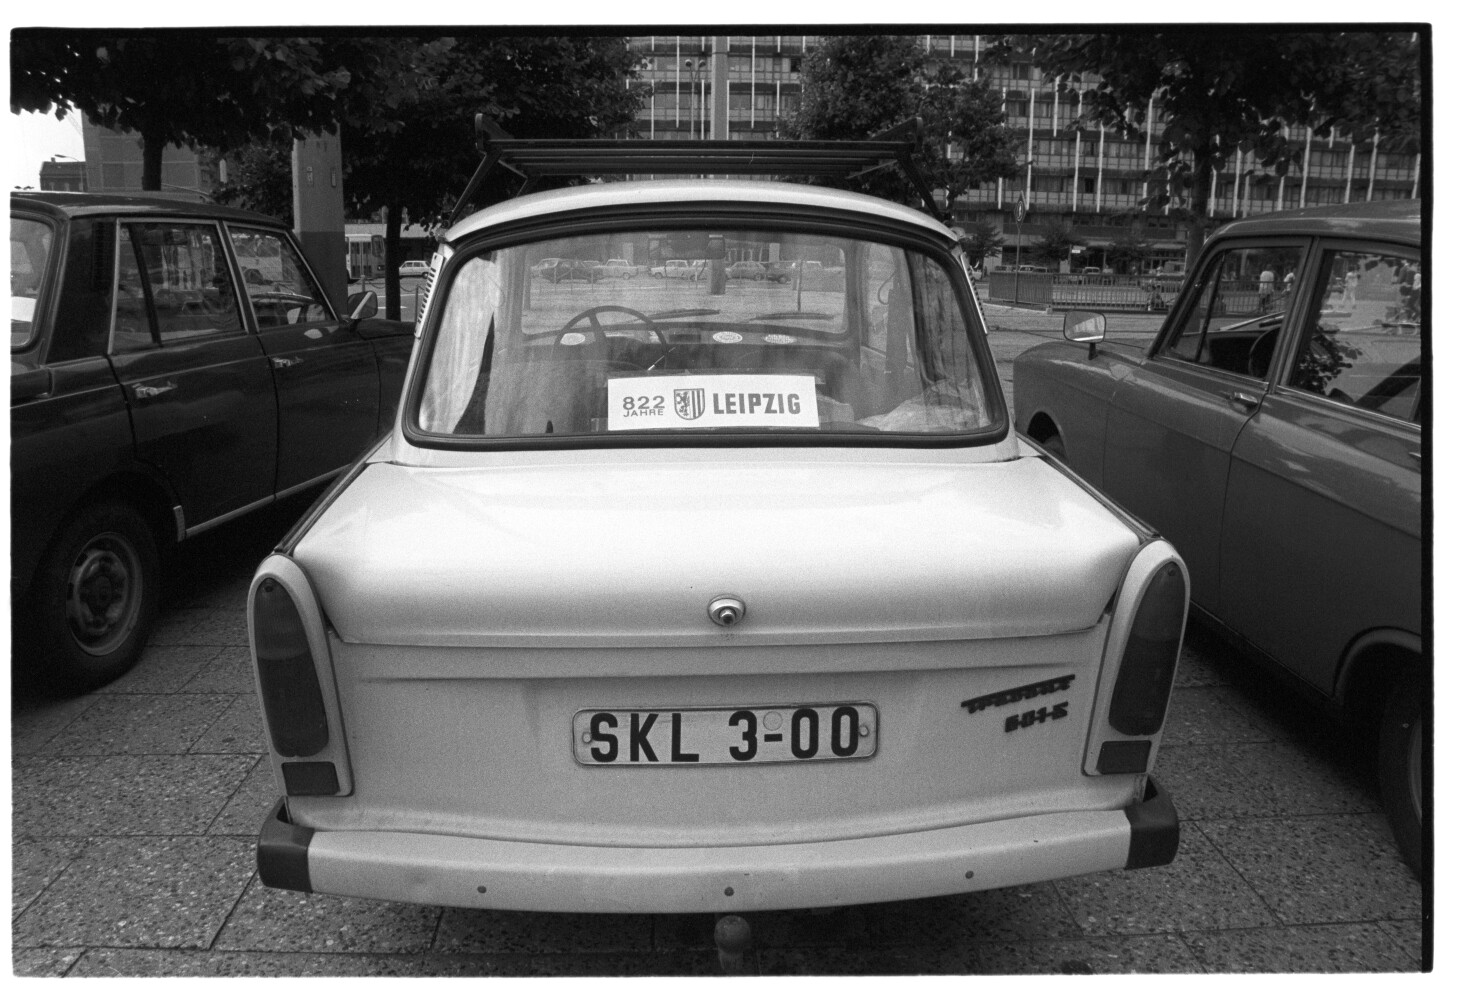 Silly 02.08.1987 II N 12 (Rita Maier / Schwules Museum Berlin RR-P)